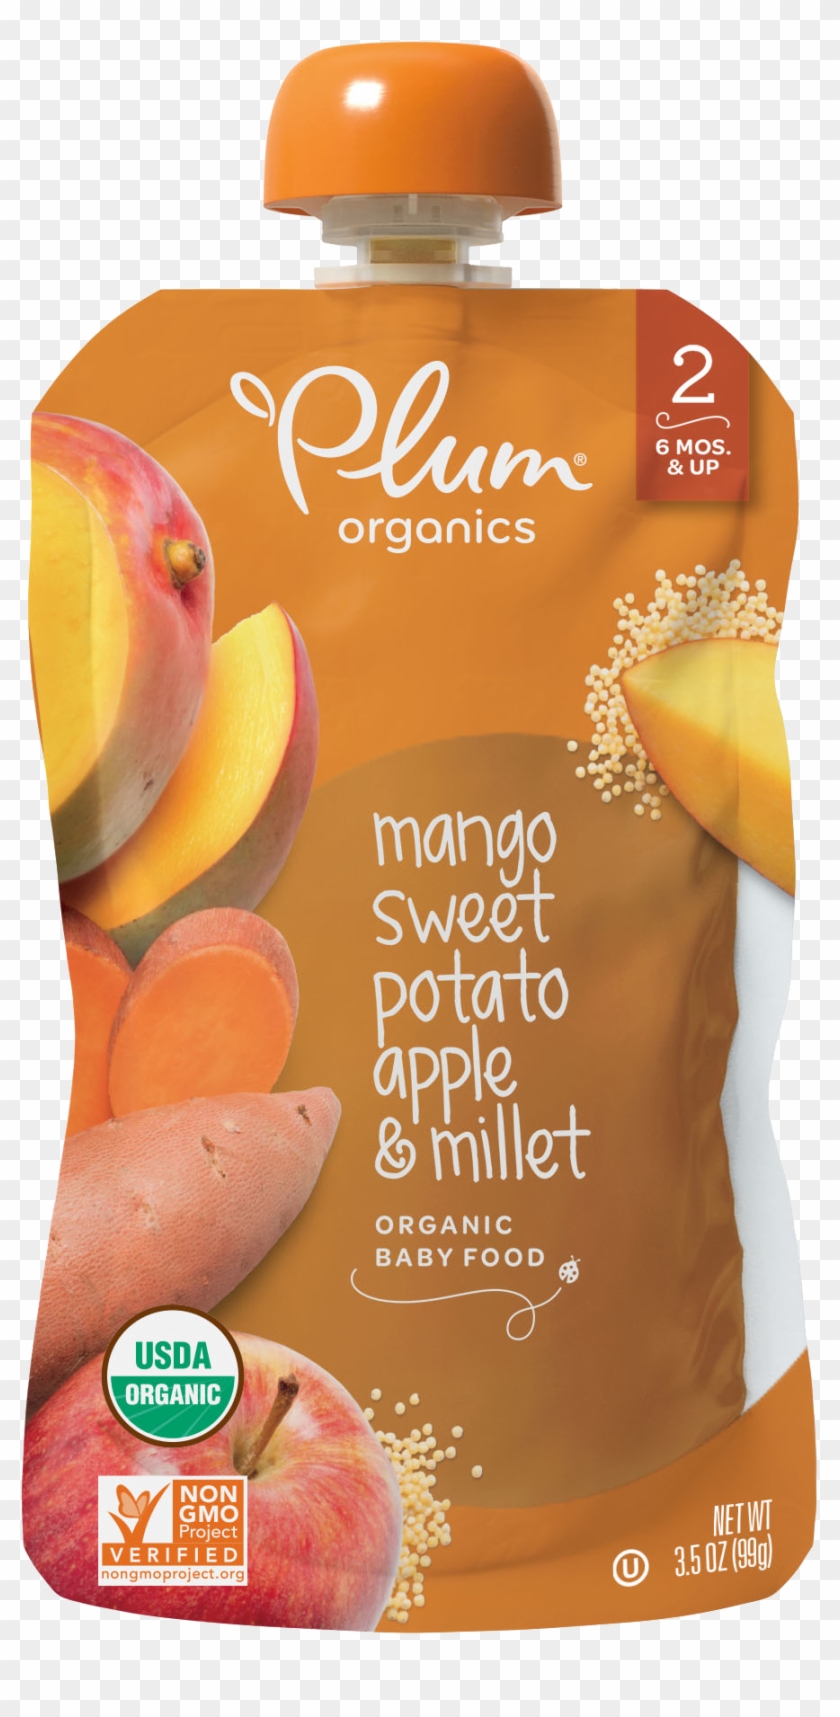 Mango, Sweet Potato, Apple & Millet - Baby Food Packaging Clipart